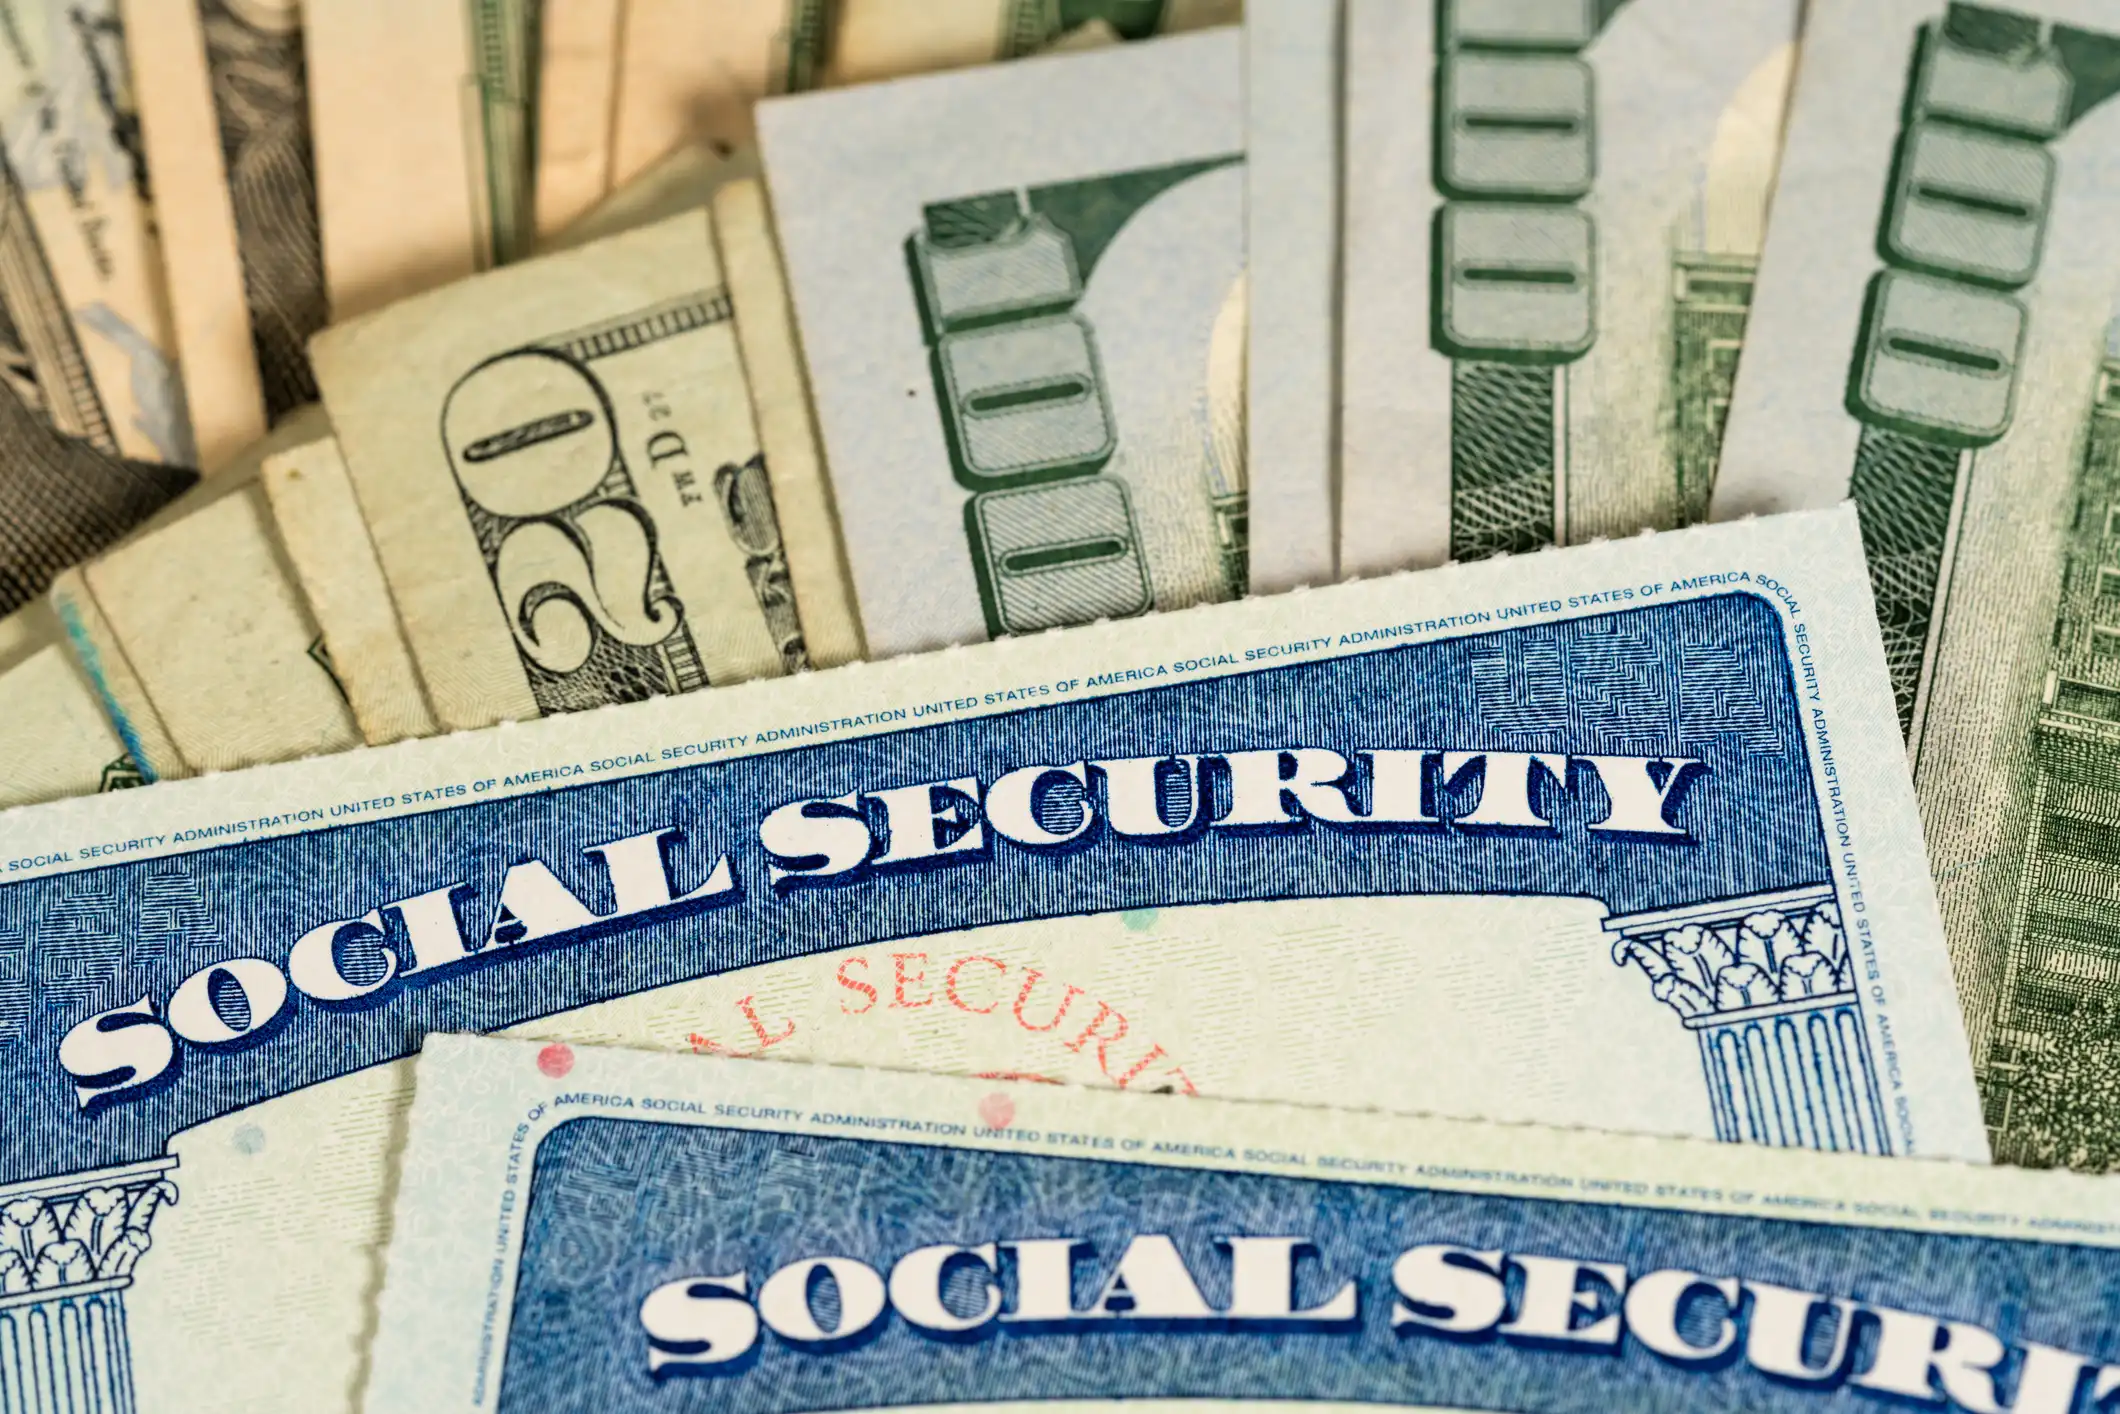 Average Increase Social Security Benefits Delaying Age 70 Motley Fool